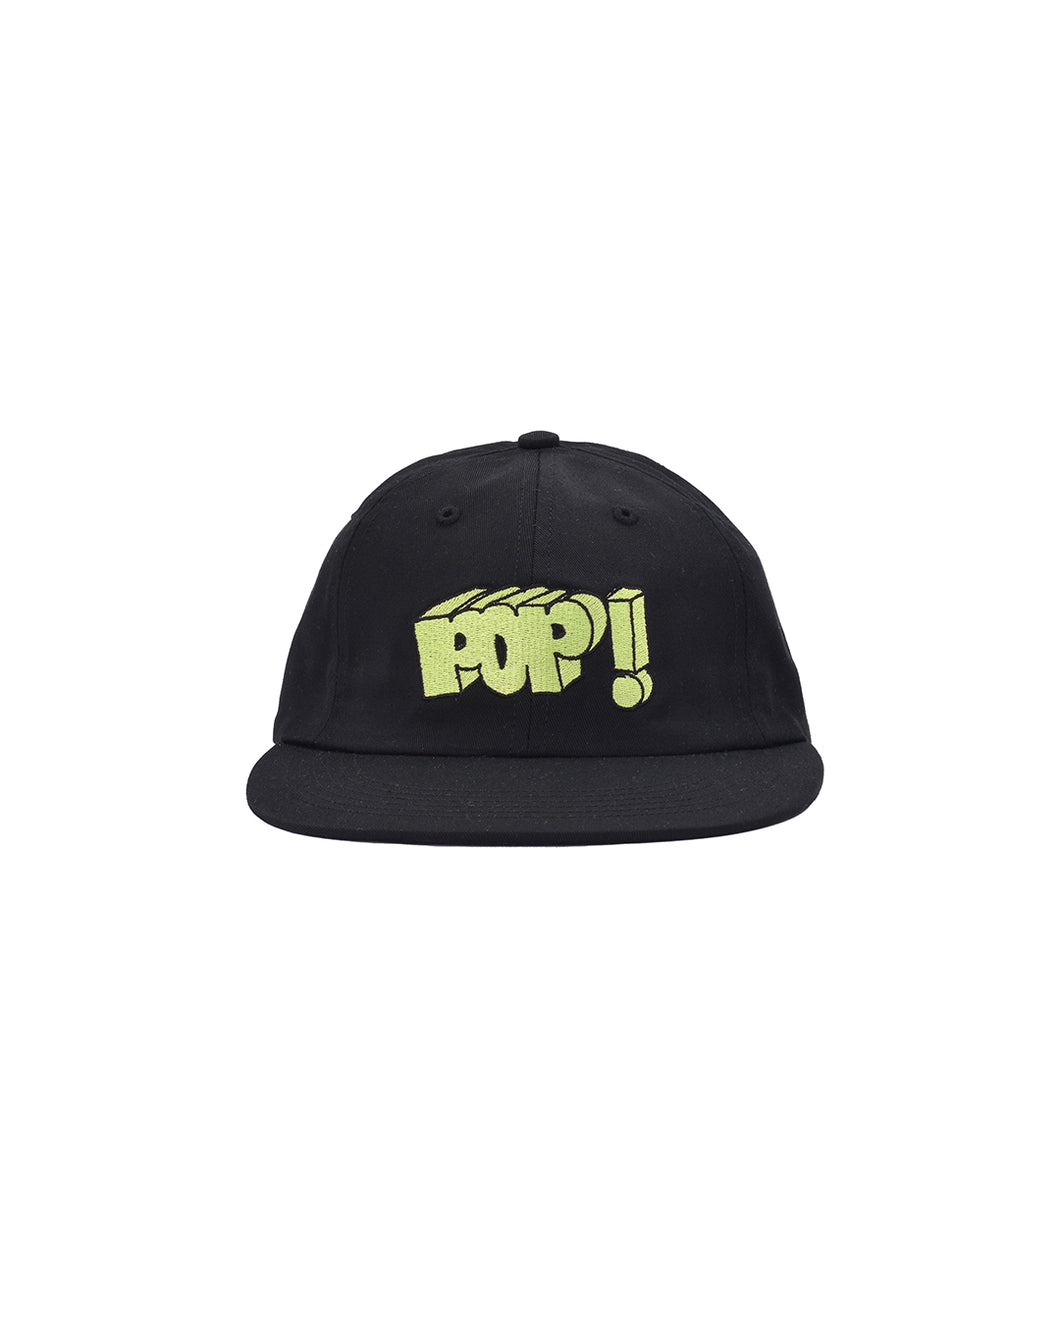 POP RIGHT YEAH SIXPANEL HAT - BLACK